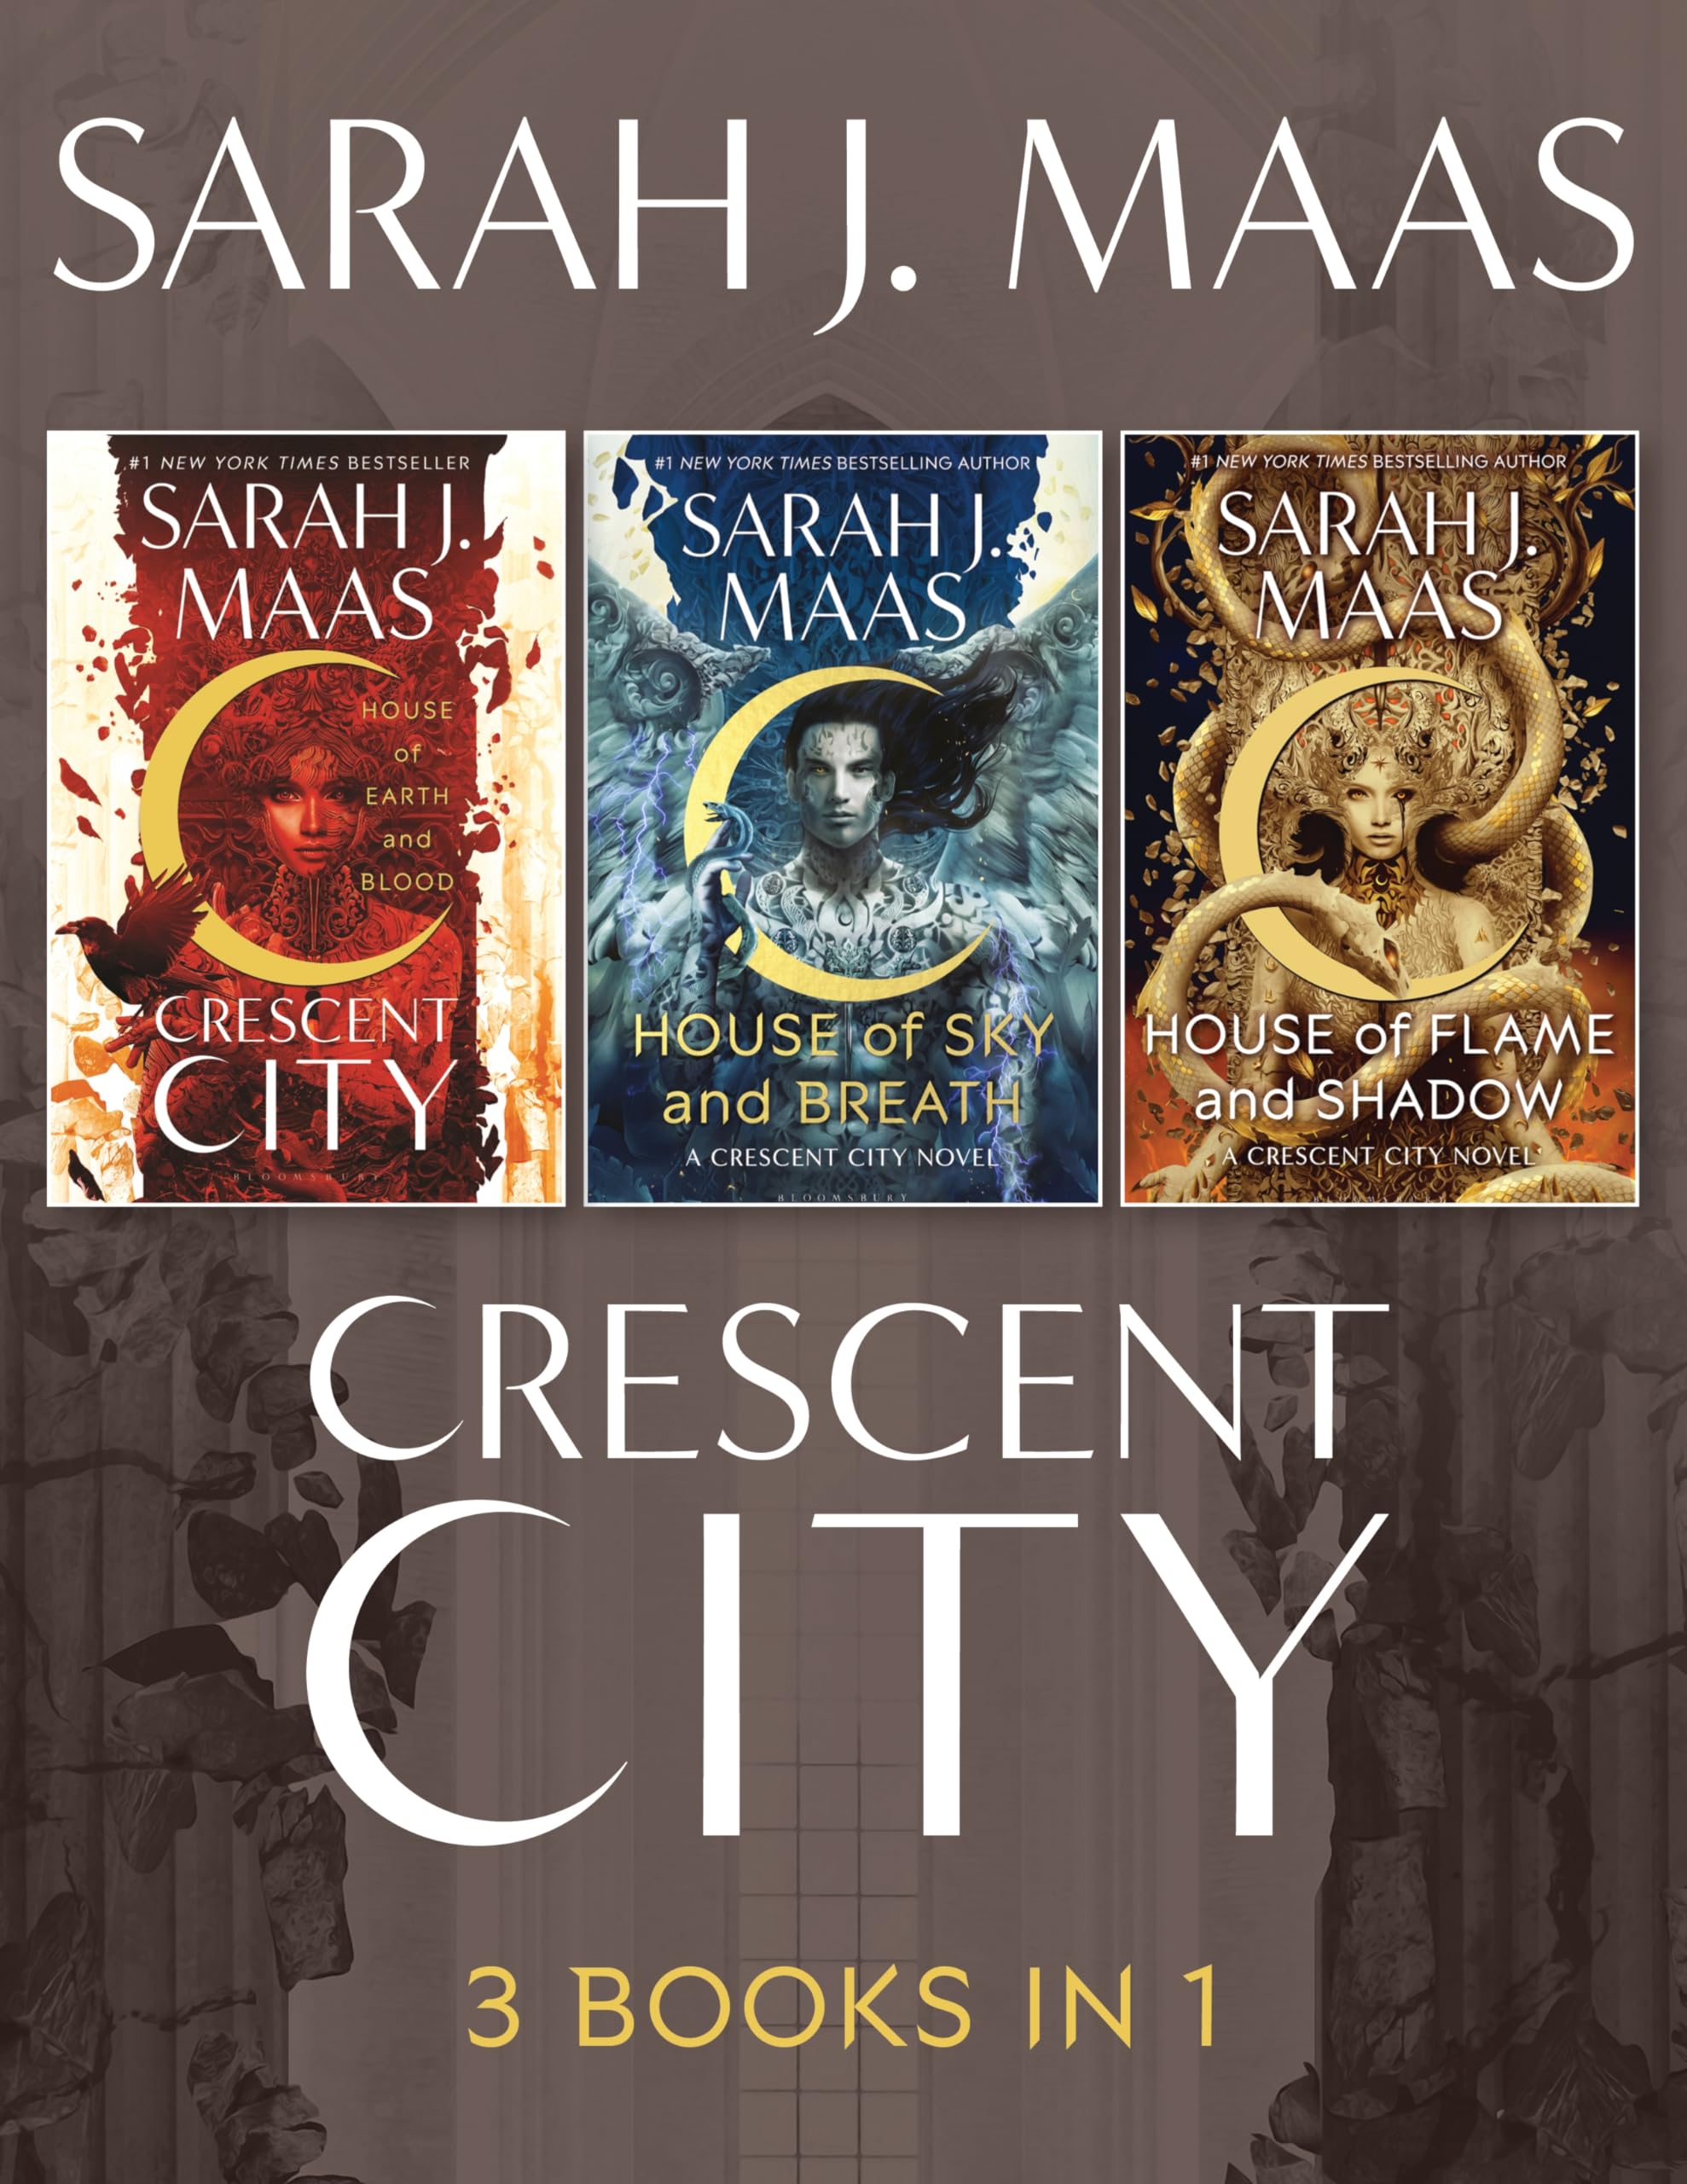 Crescent City ebook Bundle: A 3 Book Bundle